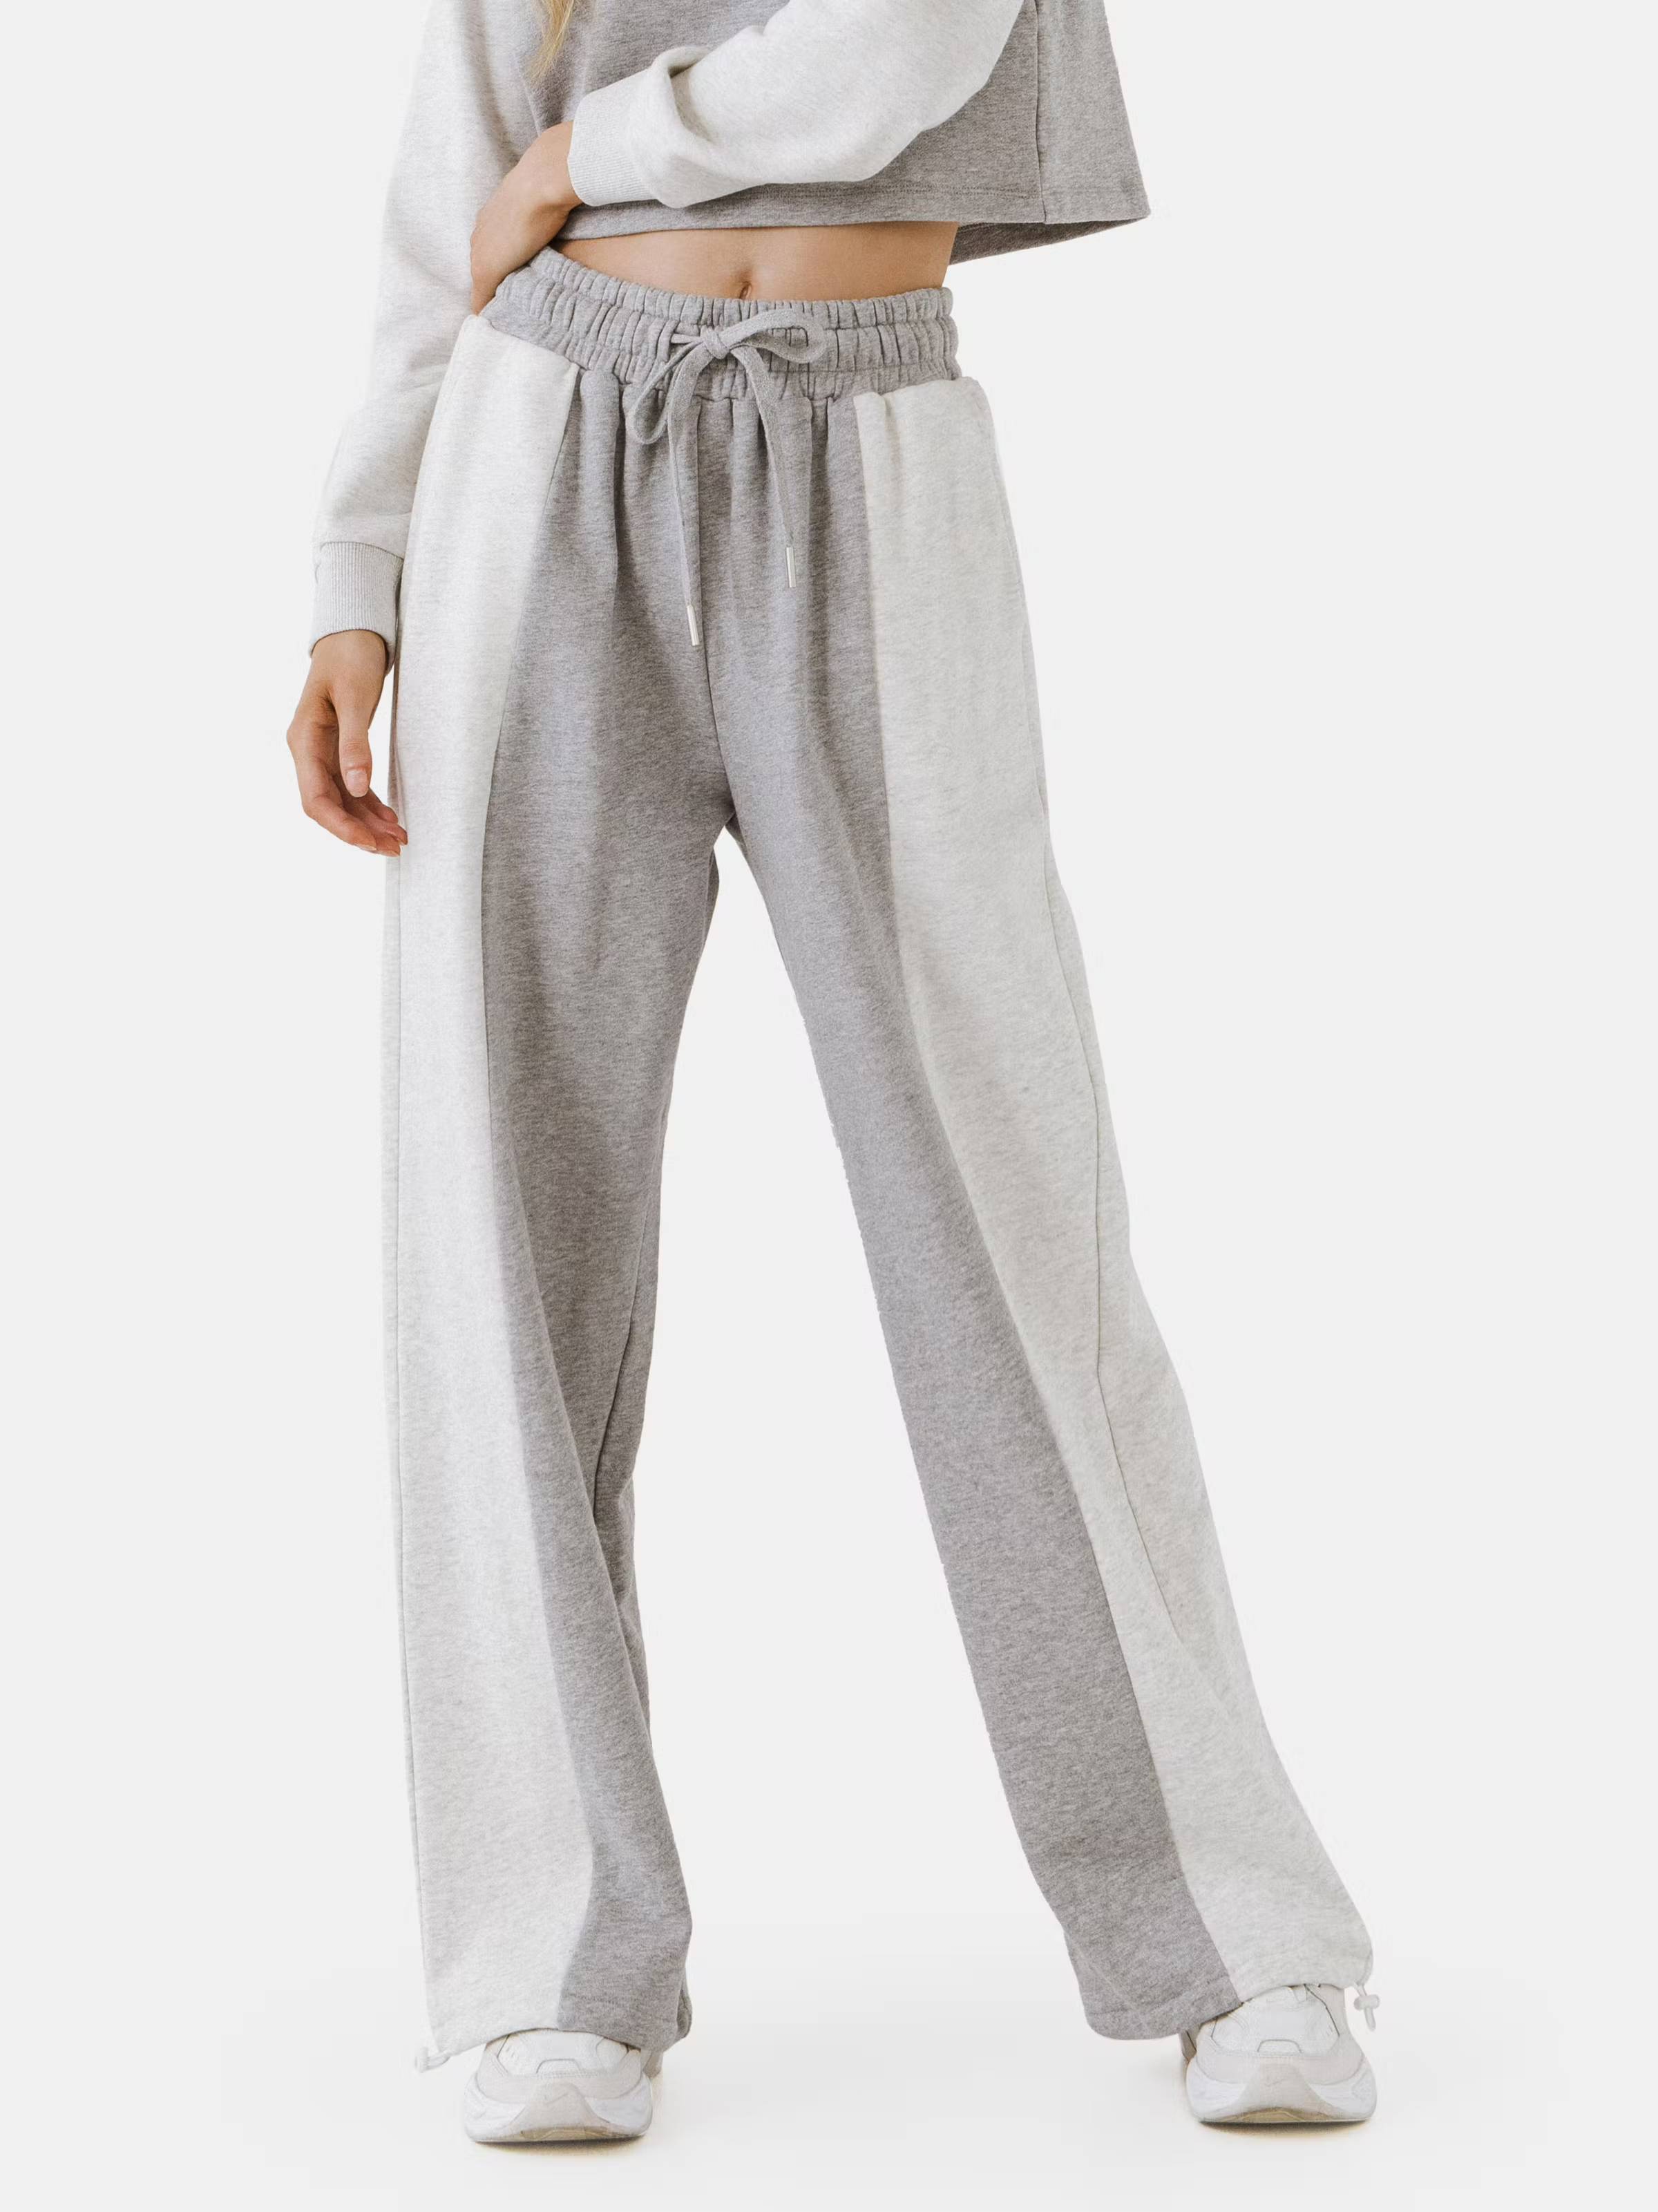 DKKK Womens High Waist Wide Leg Lounge Pants Comfy Casual Pajama Sweatpants 